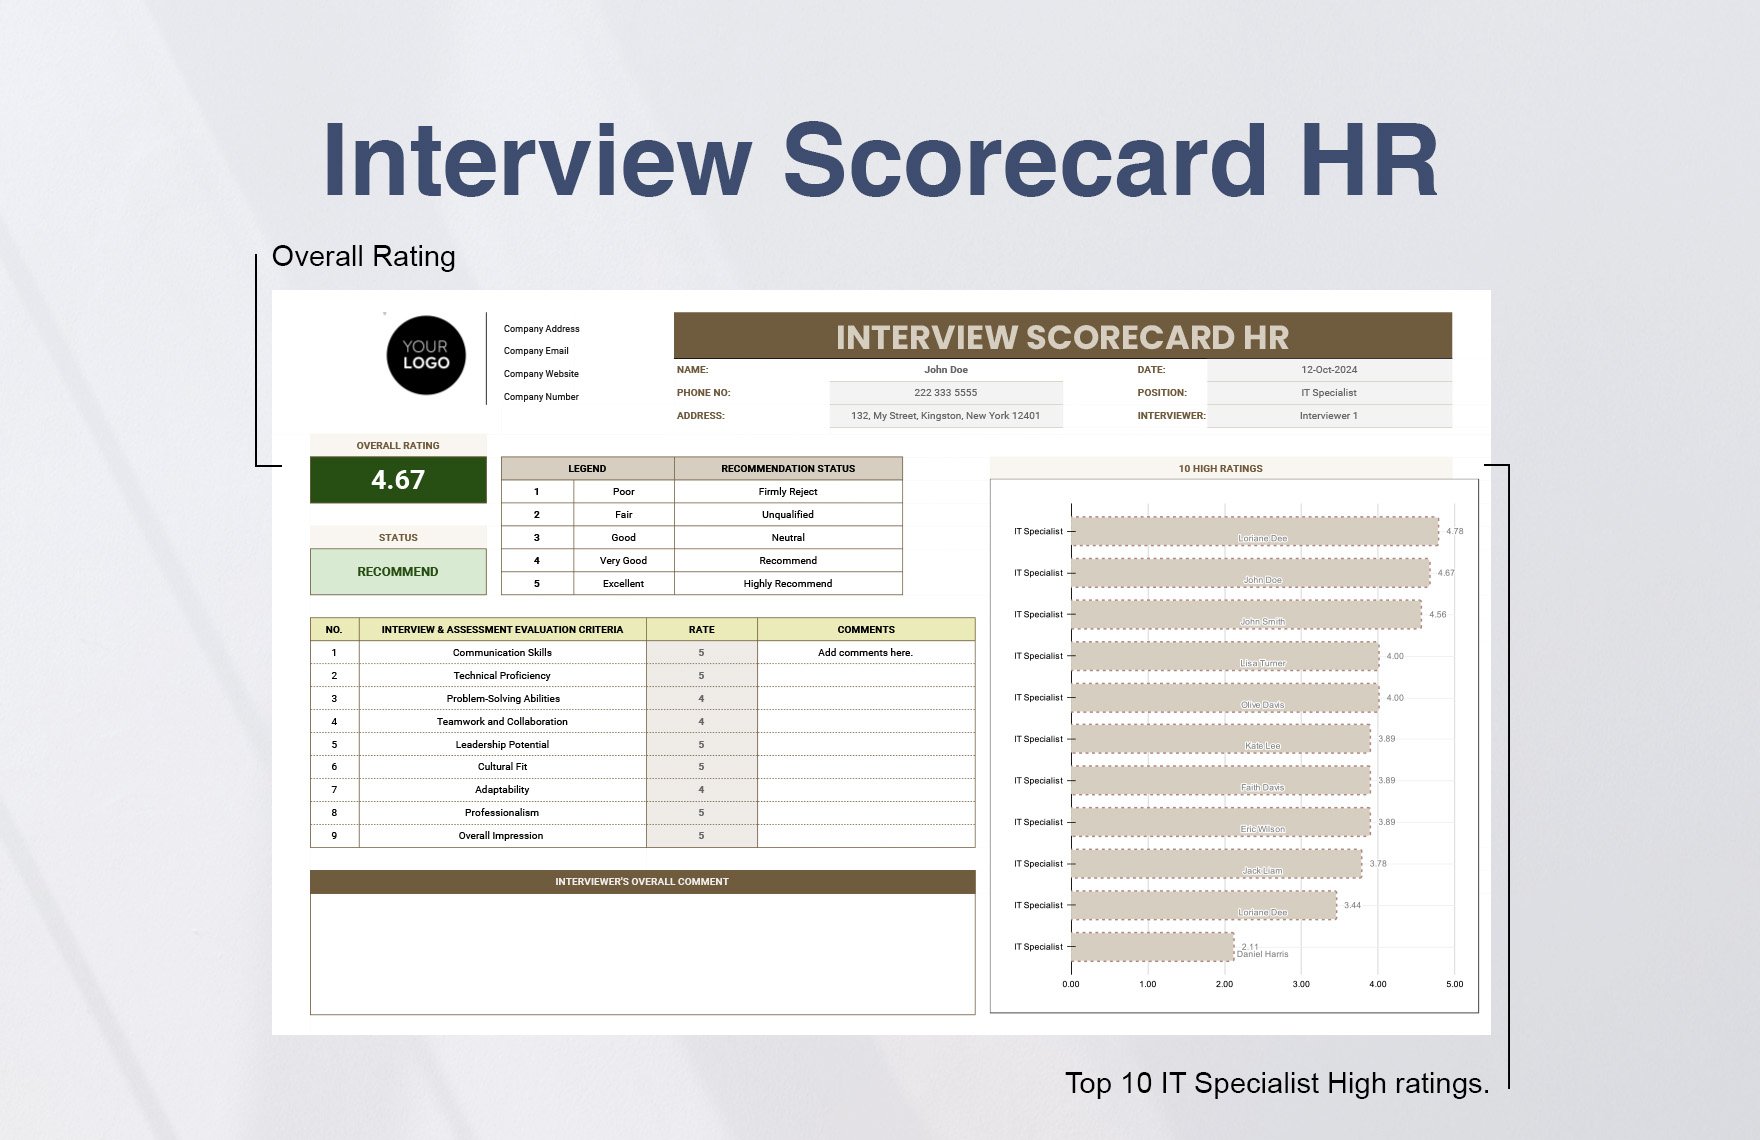 Interview Scorecard HR Template